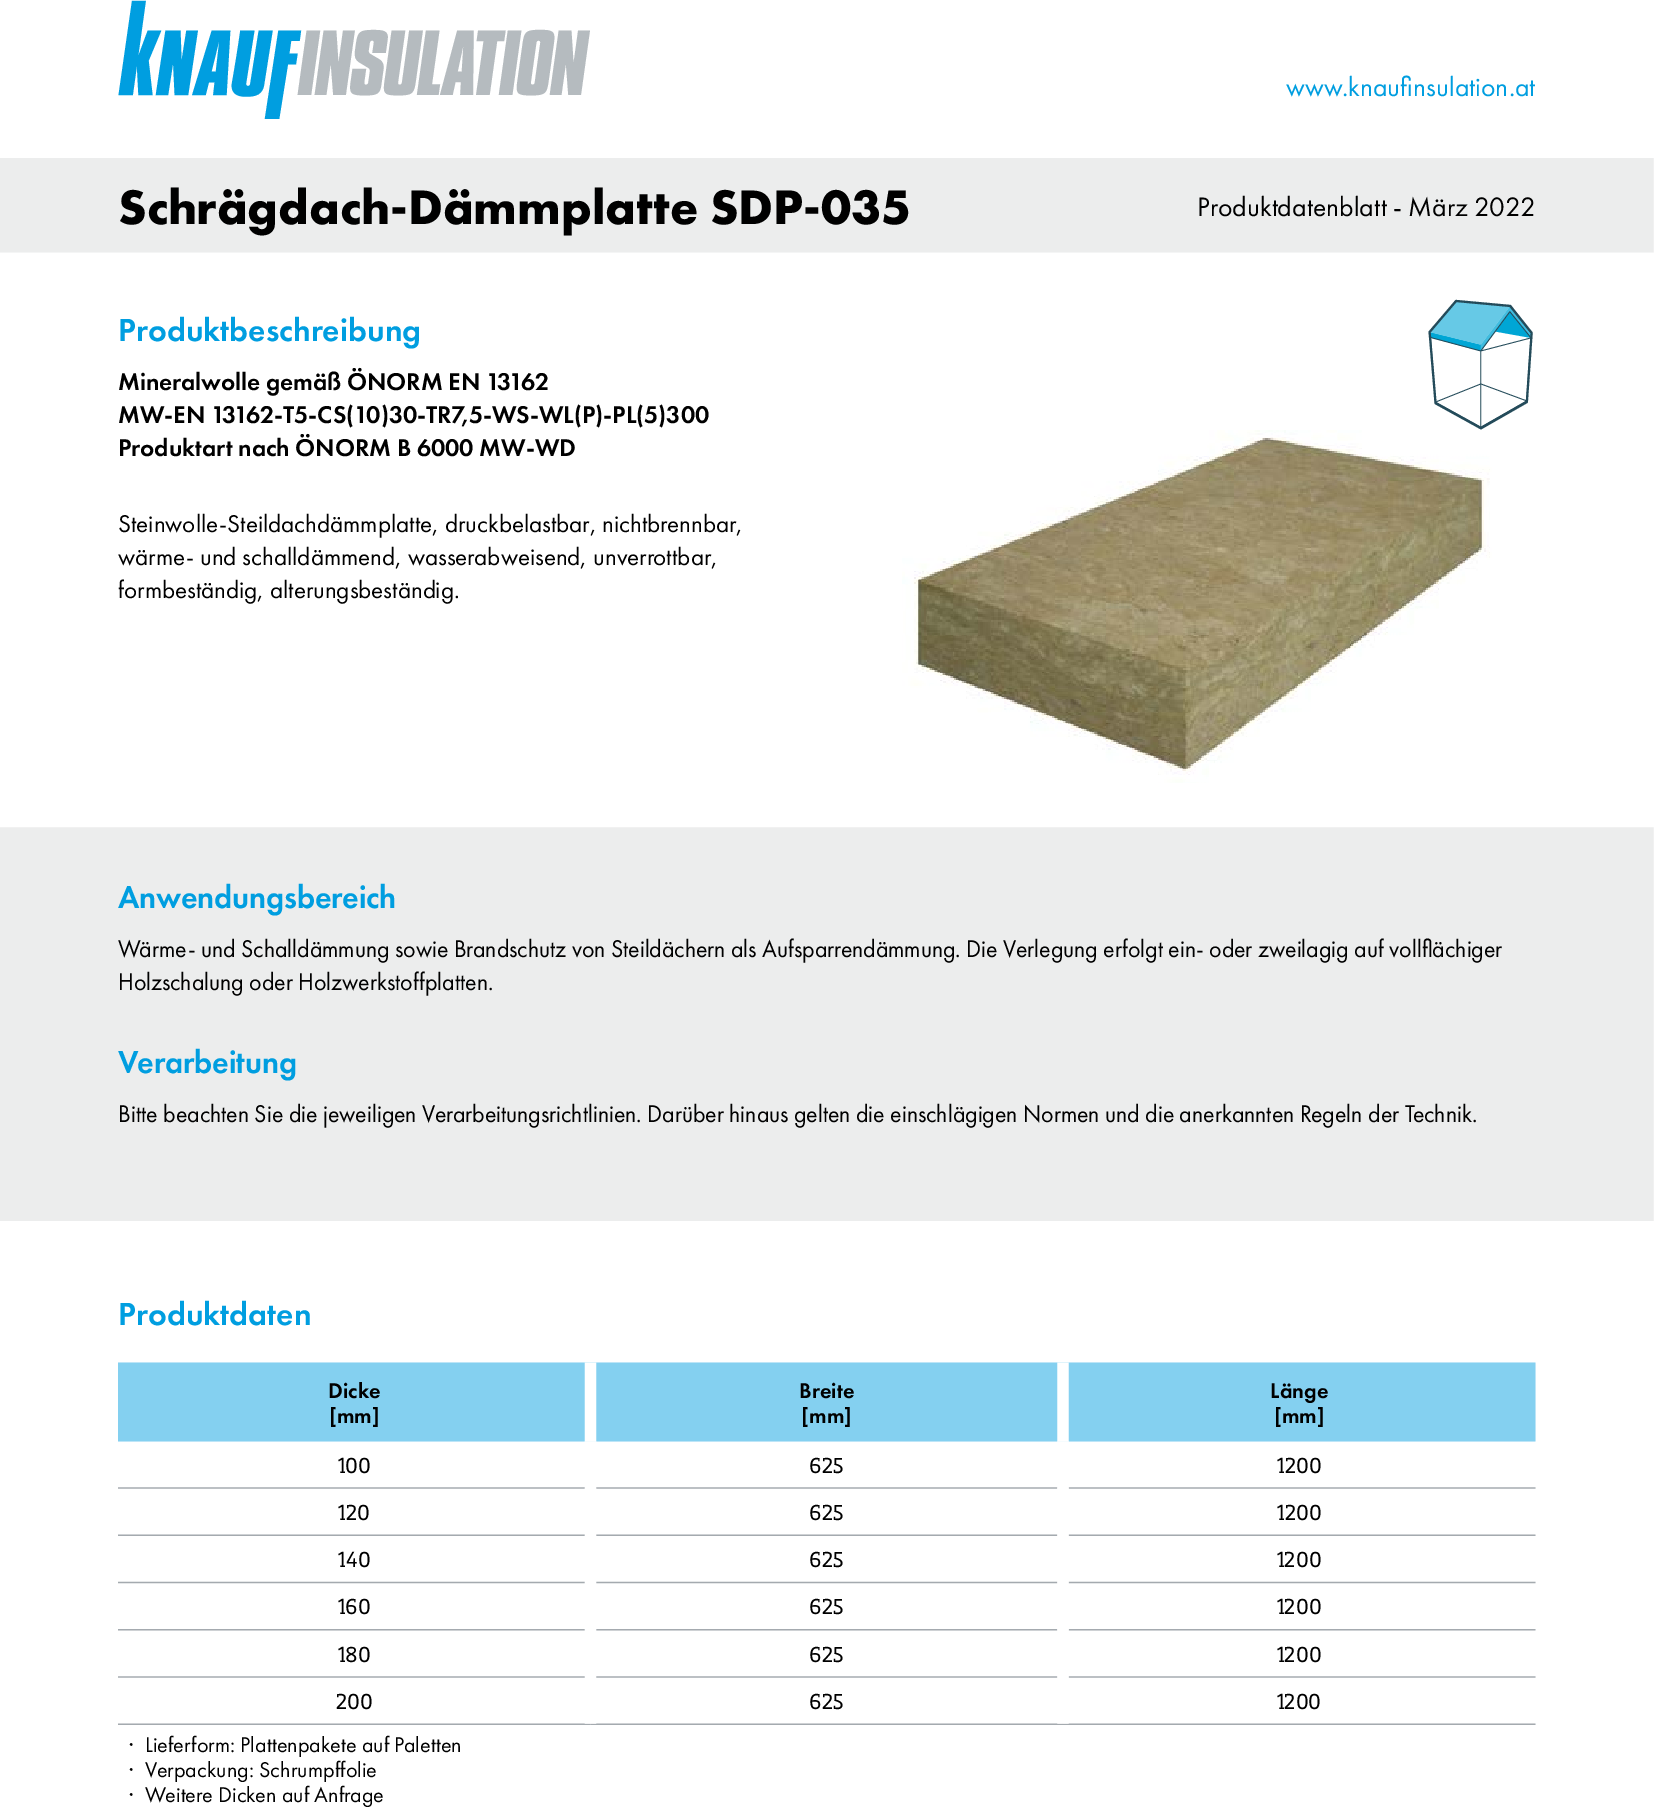 Schrägdach-Dämmplatte SDP-035, Produktdatenblatt